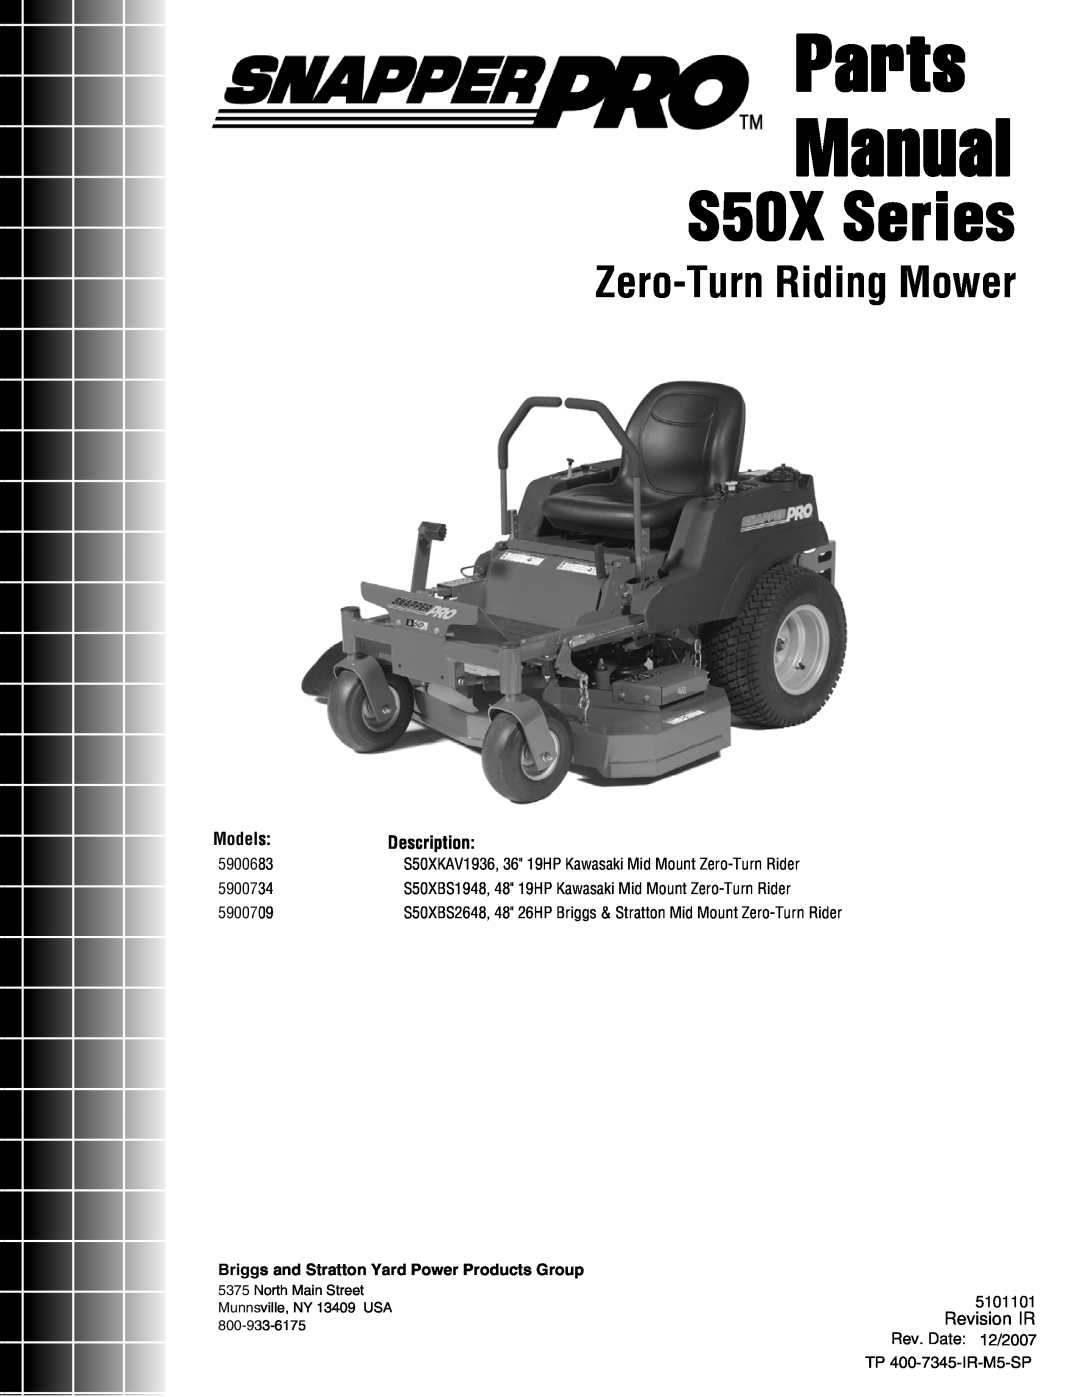 Briggs & Stratton 5900709, 5900734, 5900683 manual Parts Manual, S50X Series, Zero-TurnRiding Mower, Revision IR, Models 